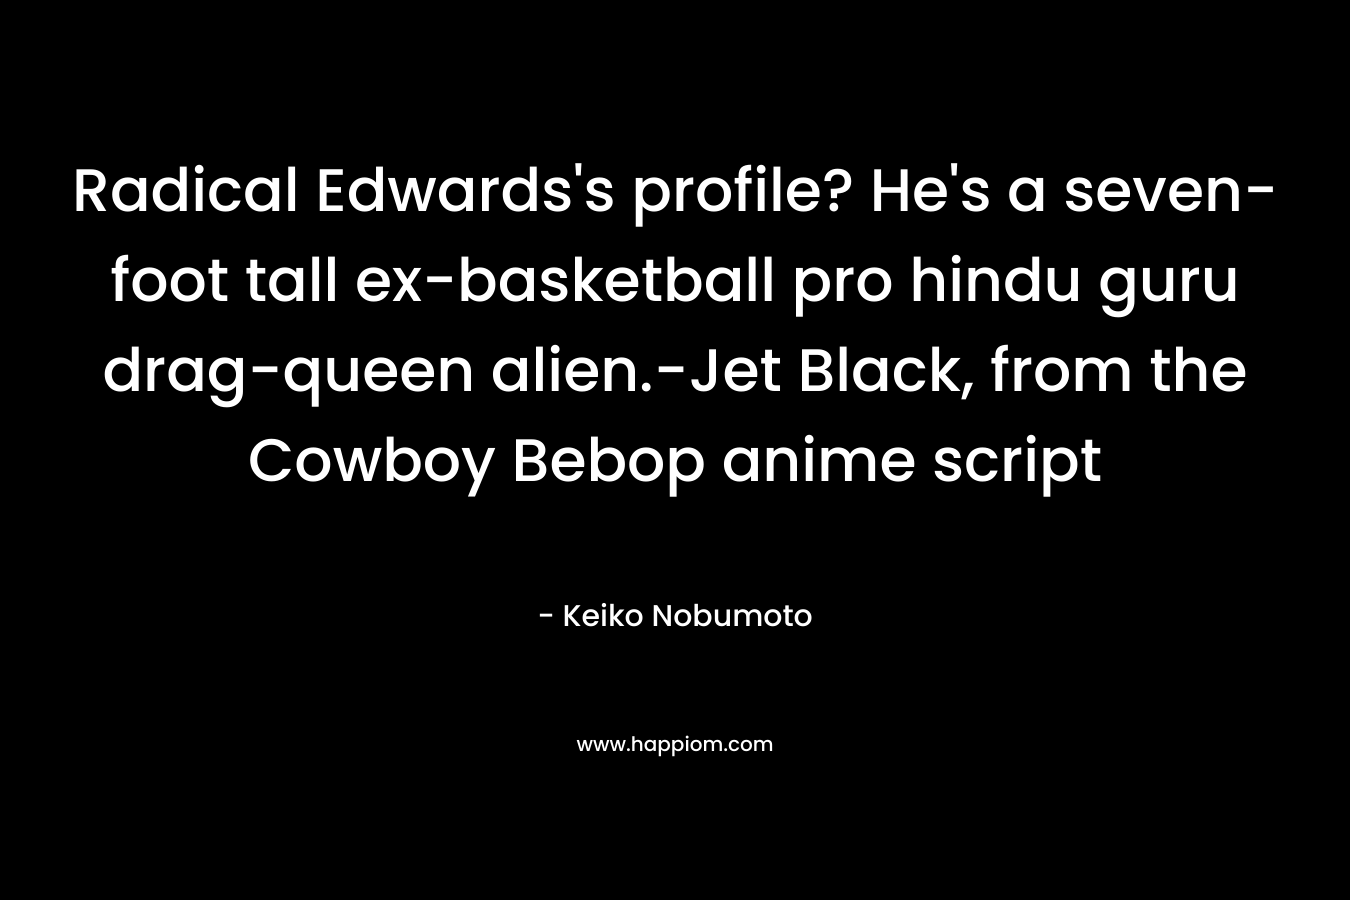 Radical Edwards's profile? He's a seven-foot tall ex-basketball pro hindu guru drag-queen alien.-Jet Black, from the Cowboy Bebop anime script